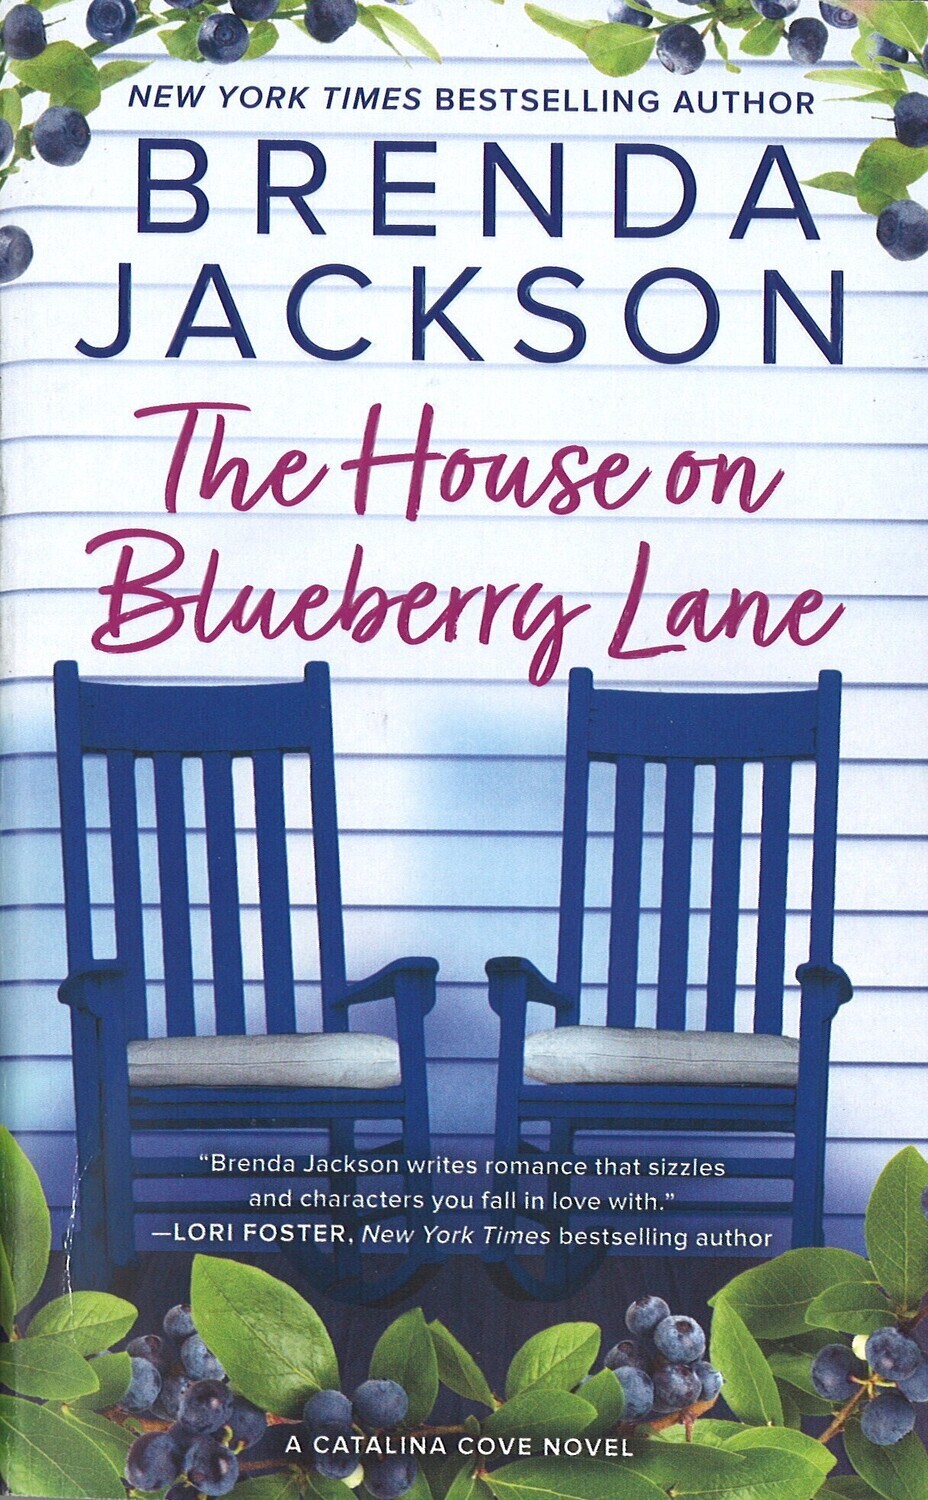 The House on Blueberry Lane (Catalina Cove novel)